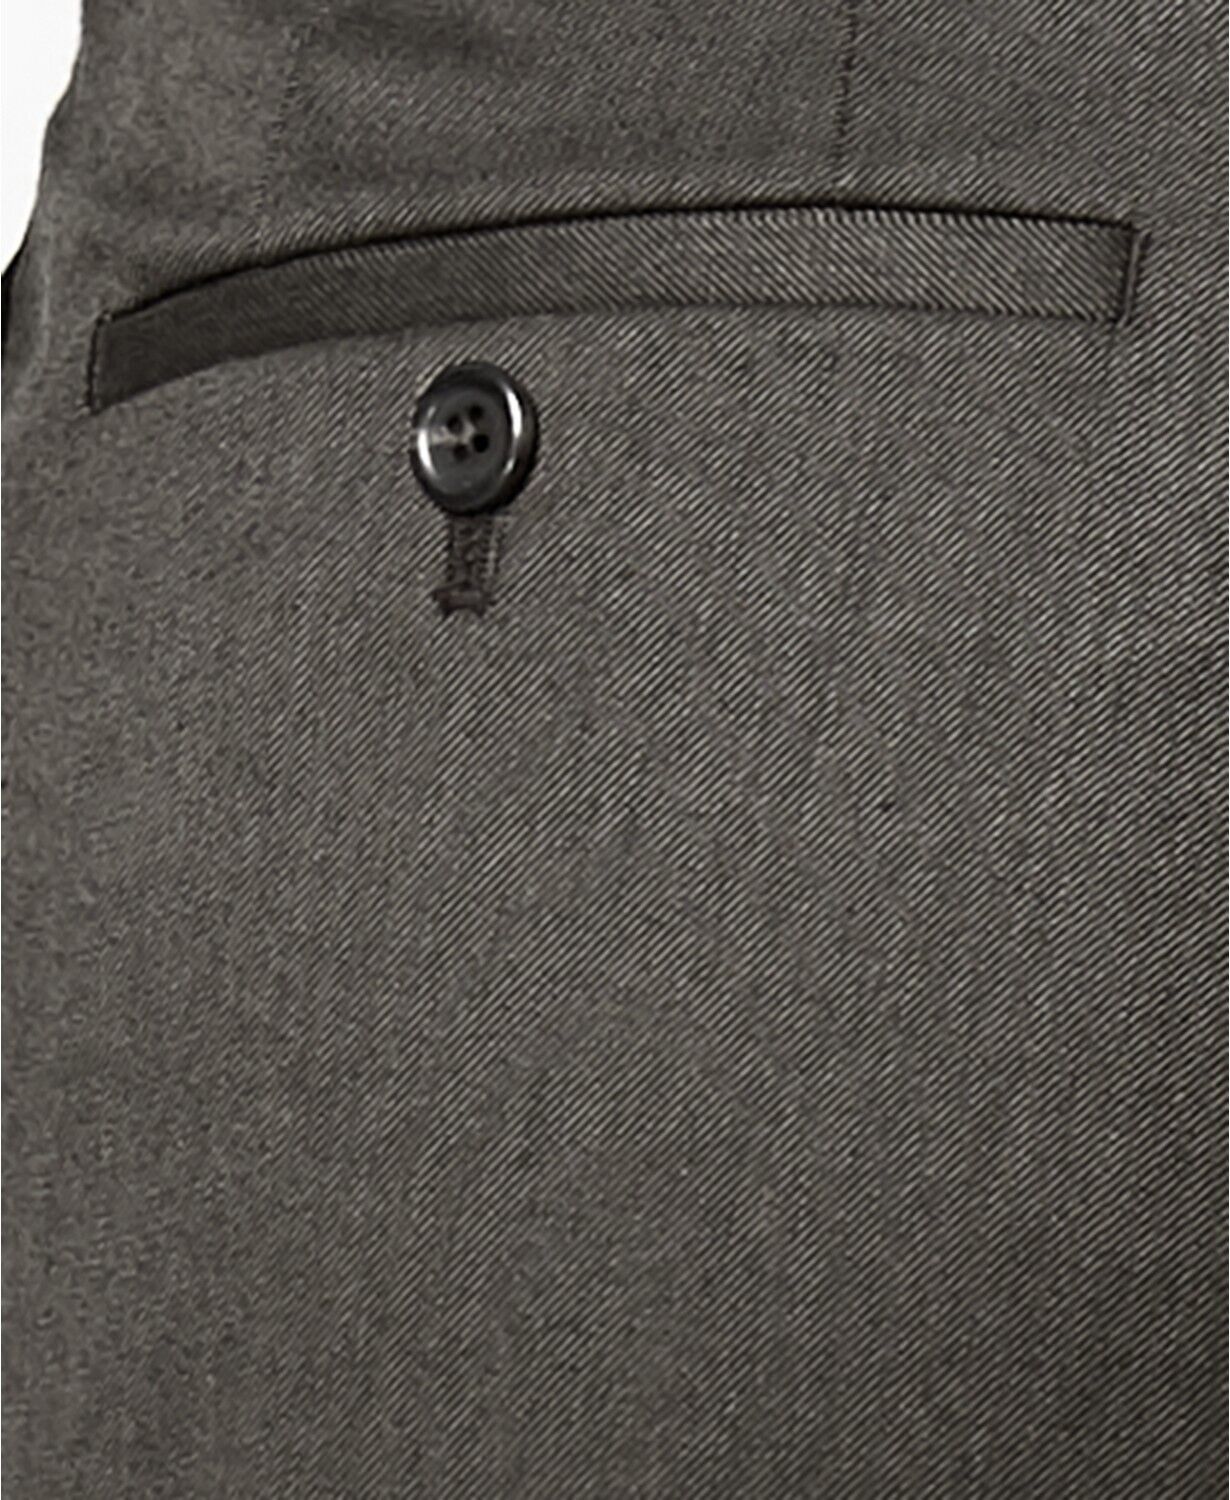 Lauren Ralph Lauren Classic Fit Micro Twill Pleated Dress Pants 32 x 32 Grey